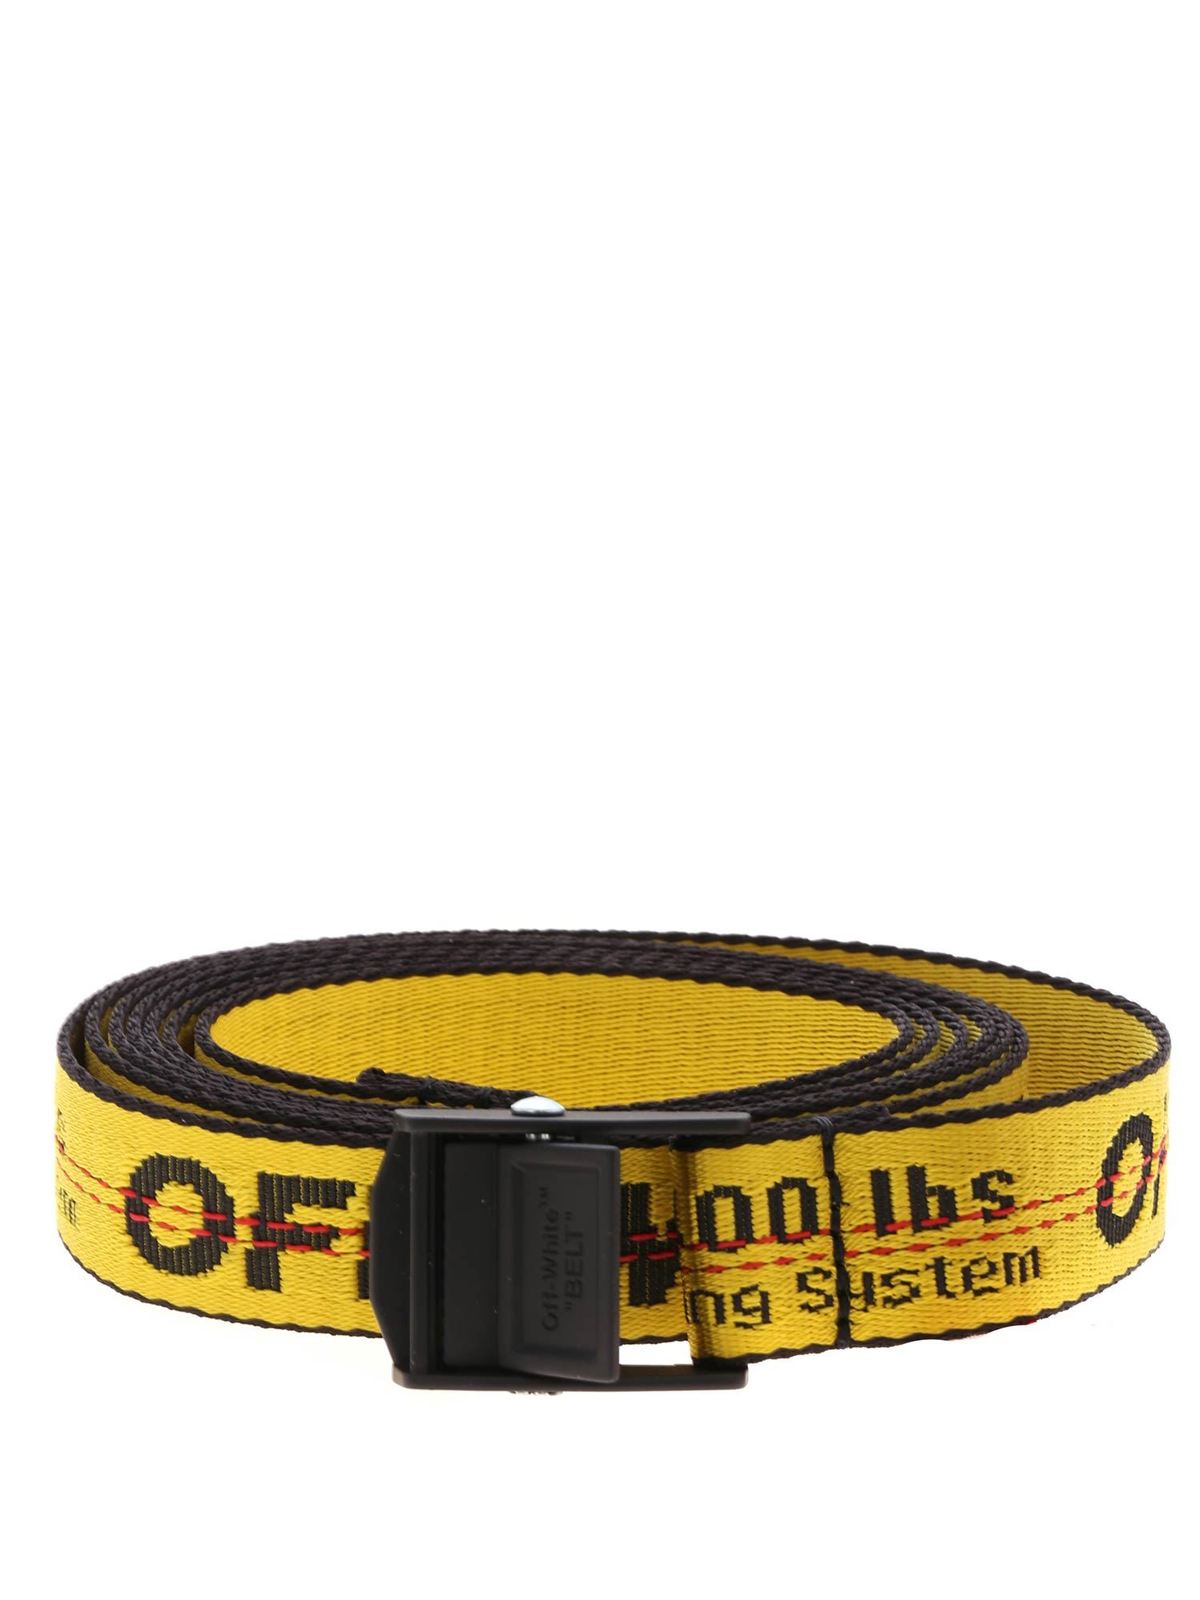 - Industrial belt in and black - OWRB011R202230756010